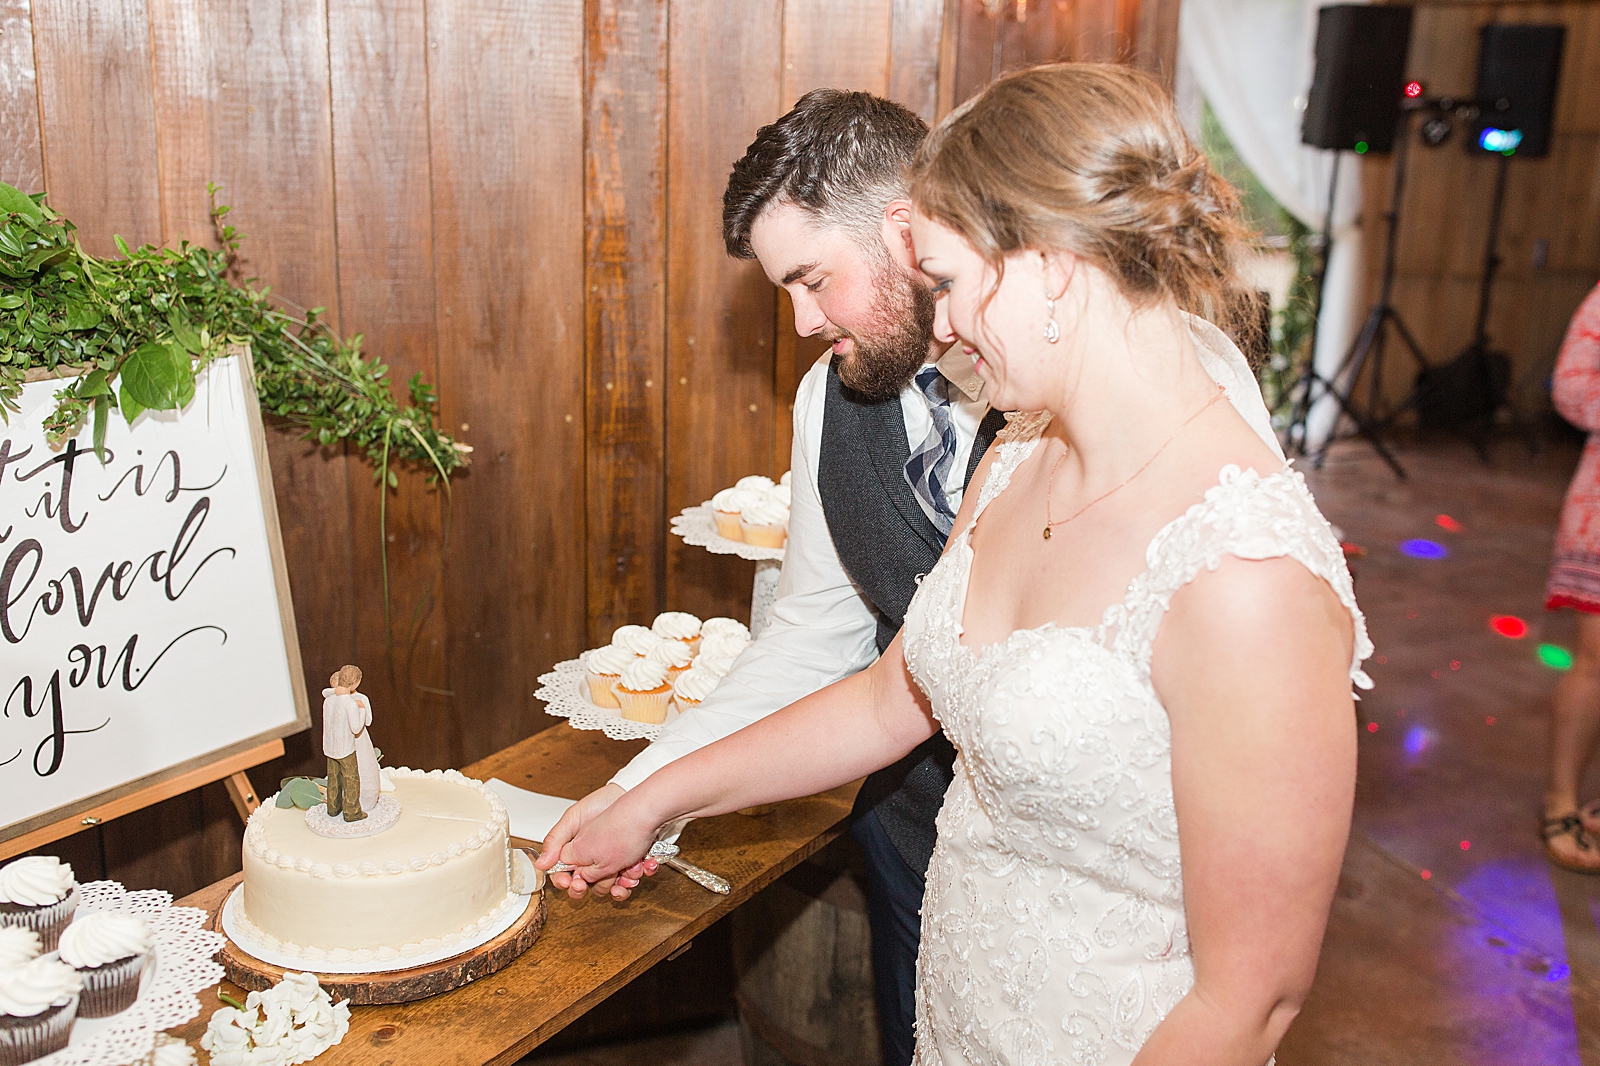 Macedonia Hills Wedding Reception Bride and Groom Cutting Cake Photo